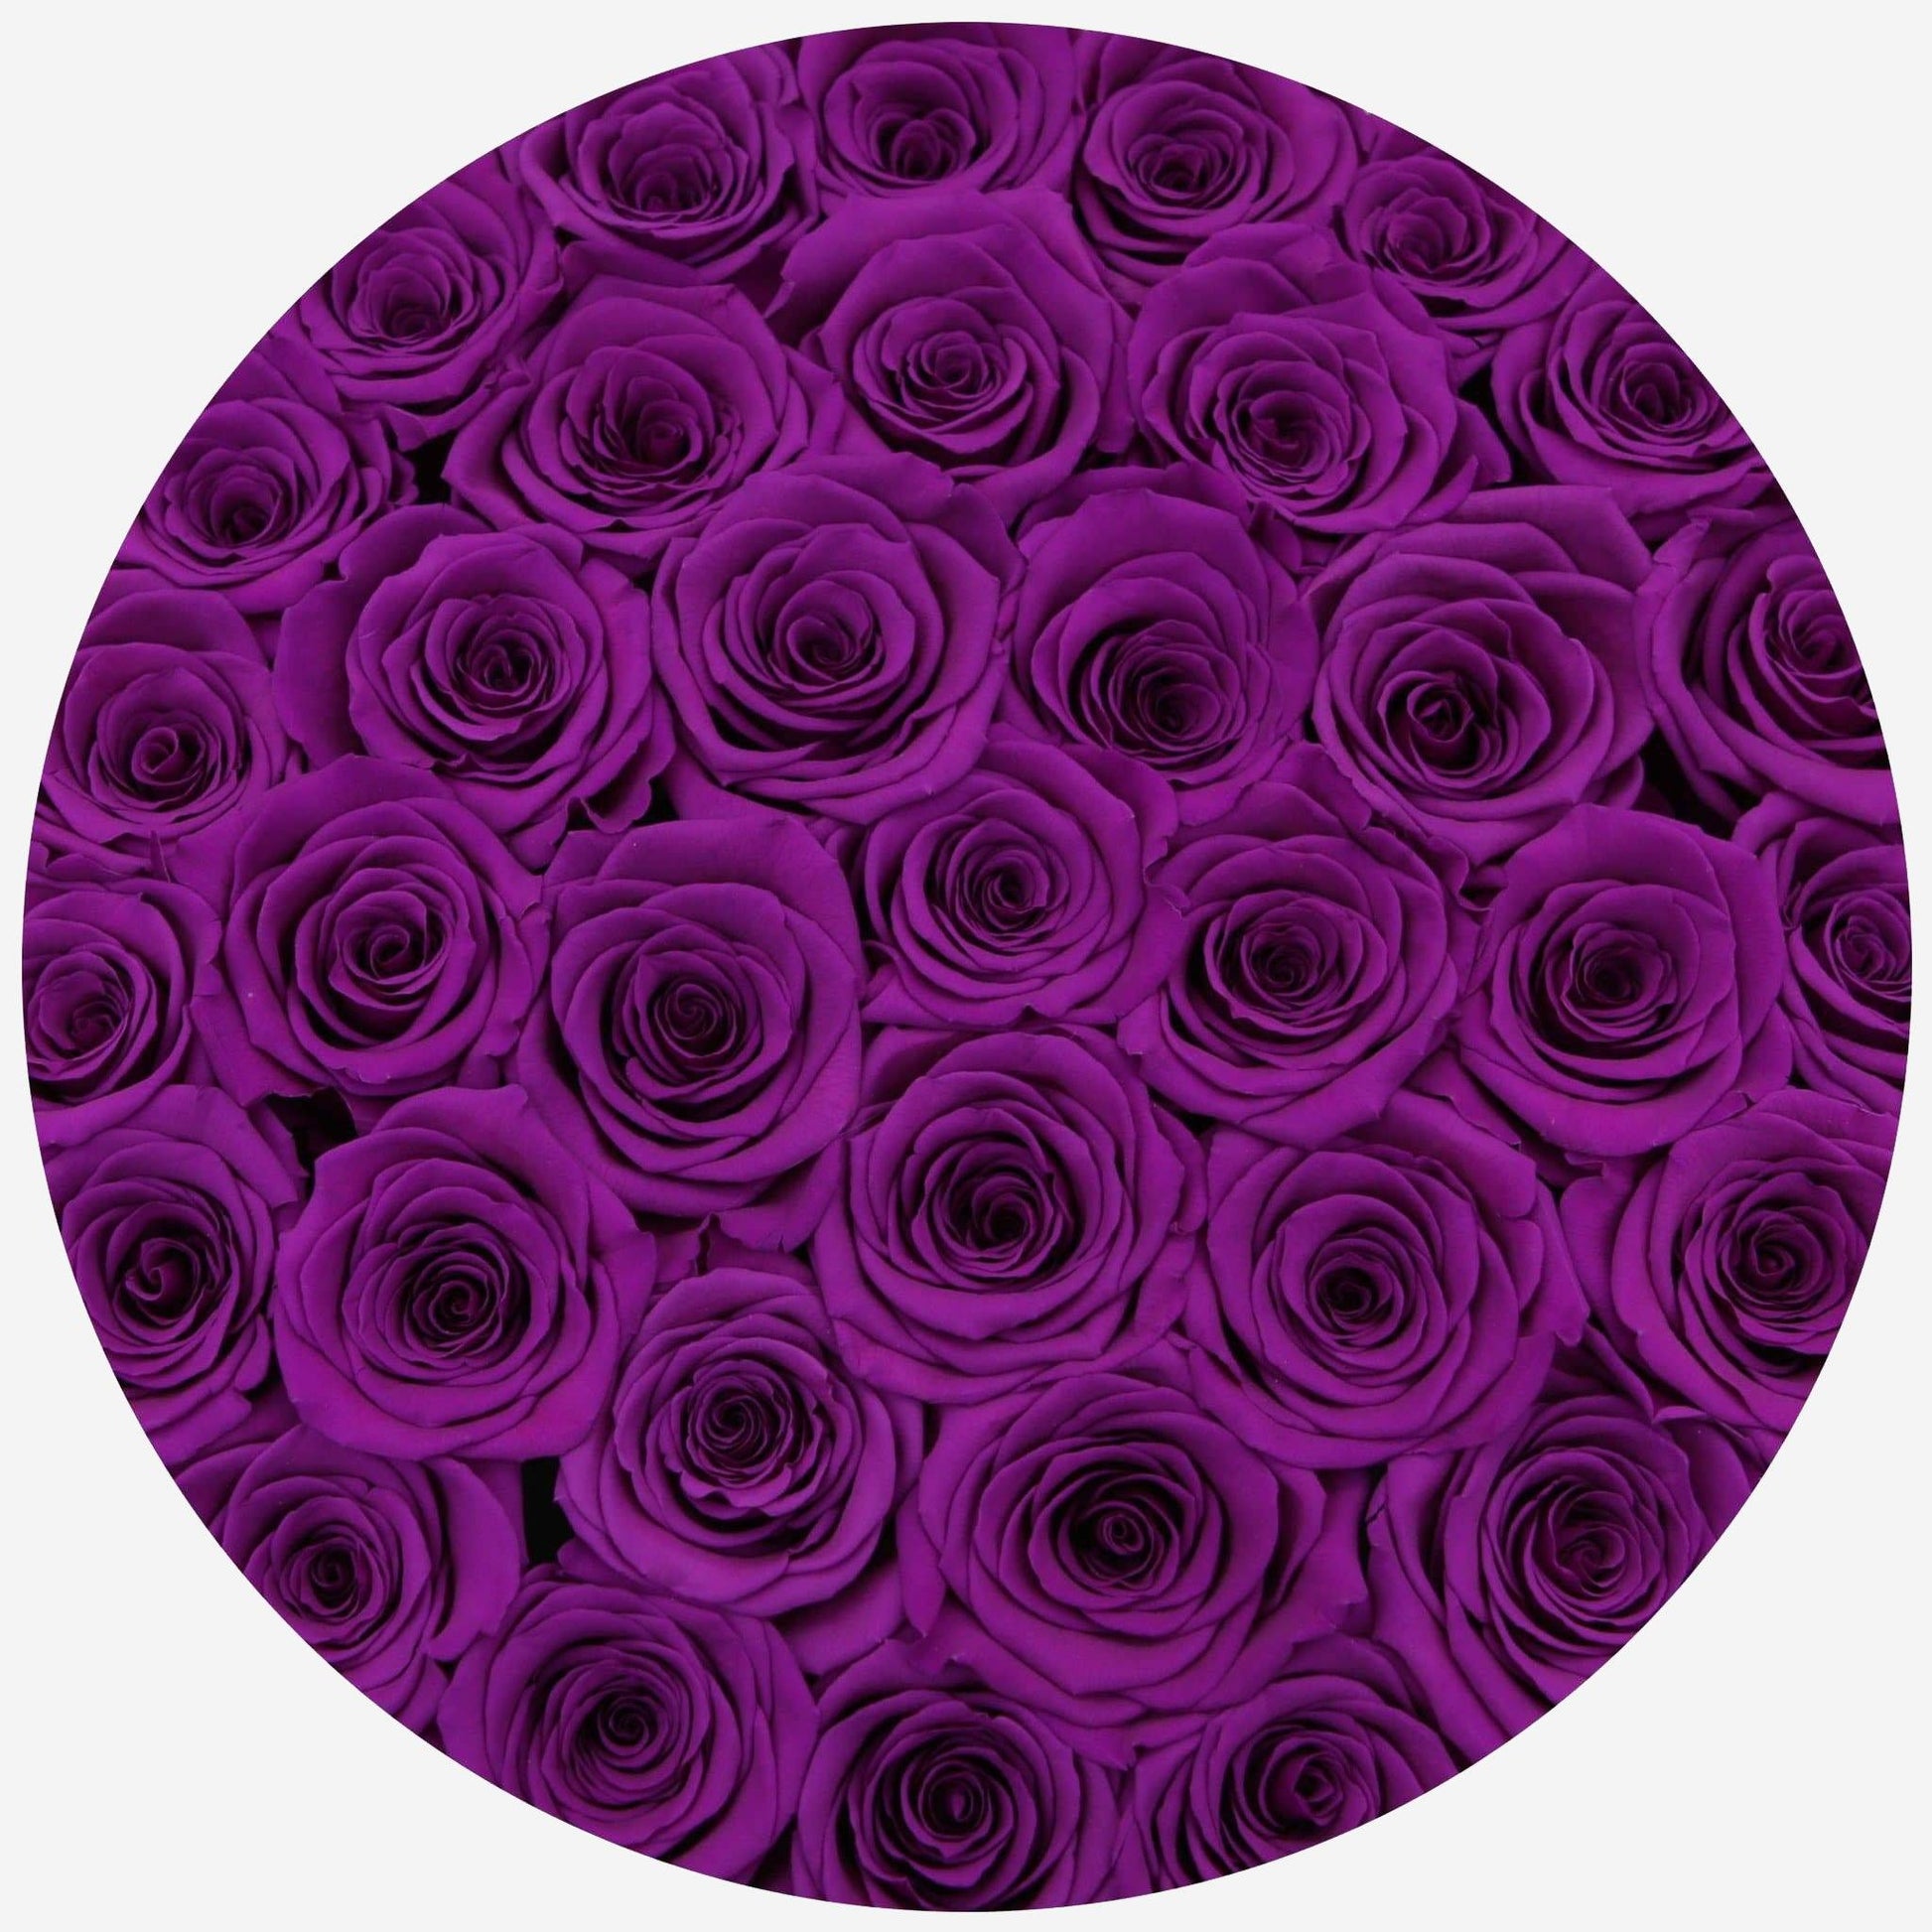 Supreme White Box | Bright Purple Roses - The Million Roses